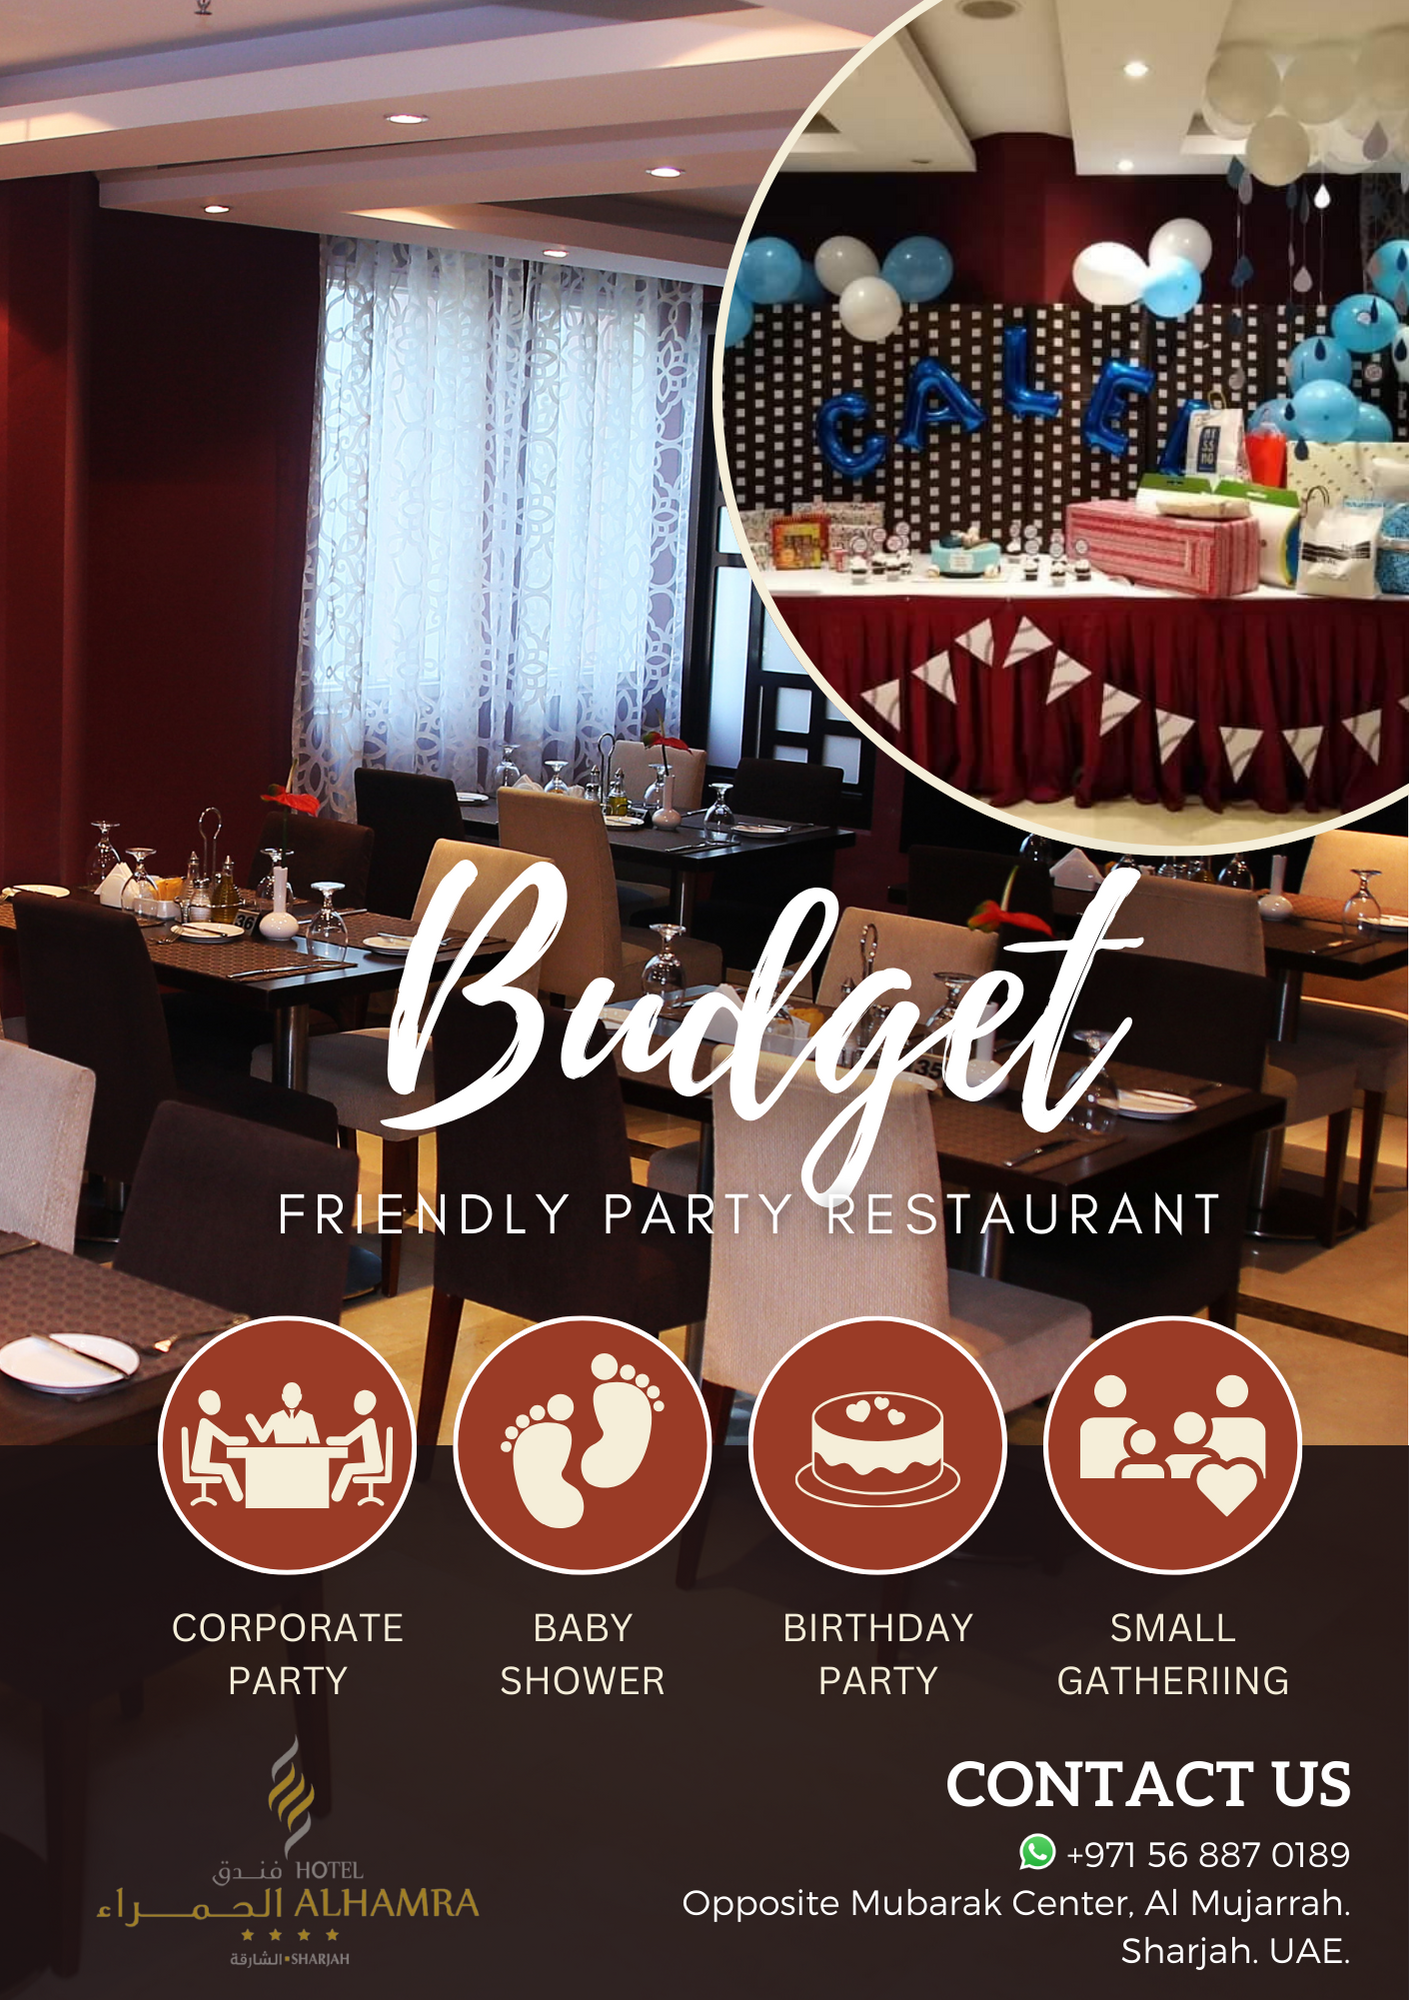 Budget Friendly Buffet Party Restaurant in Sharjah